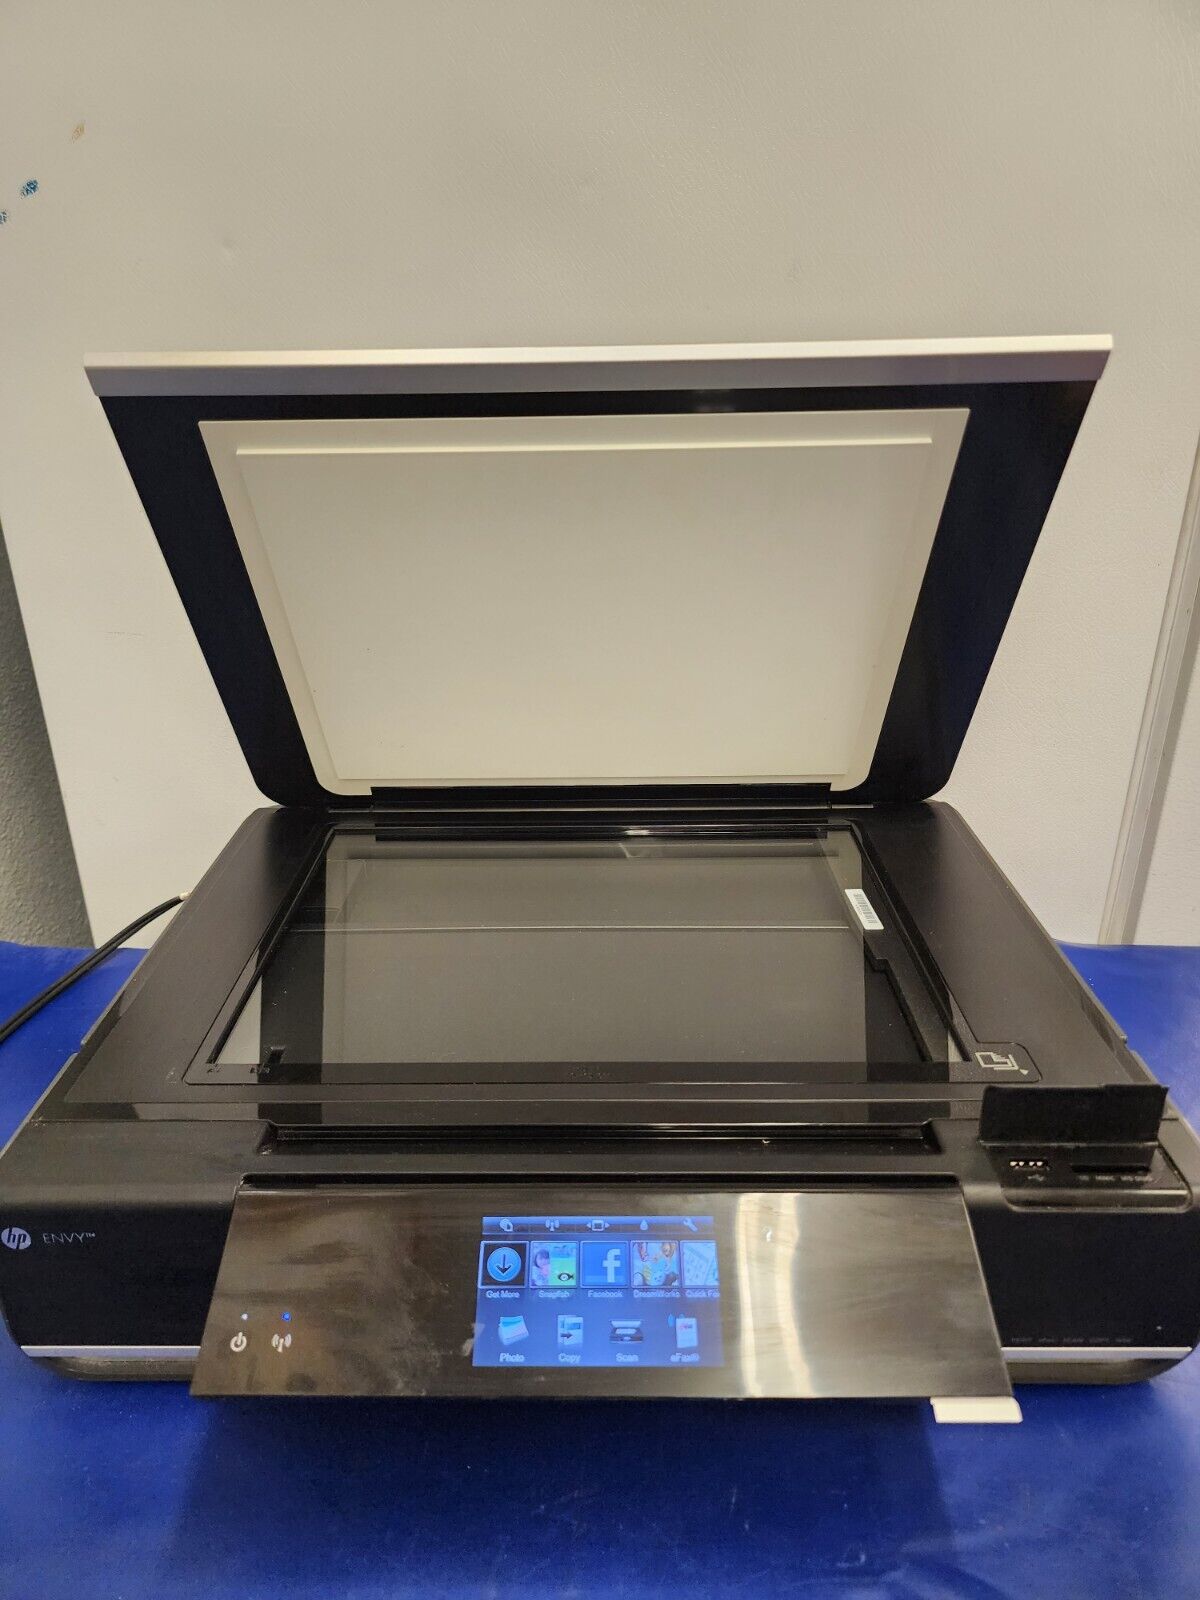 HP ENVY Inkjet Printer 110 Wireless ALL-IN-ONE D411 Smart Printing System  